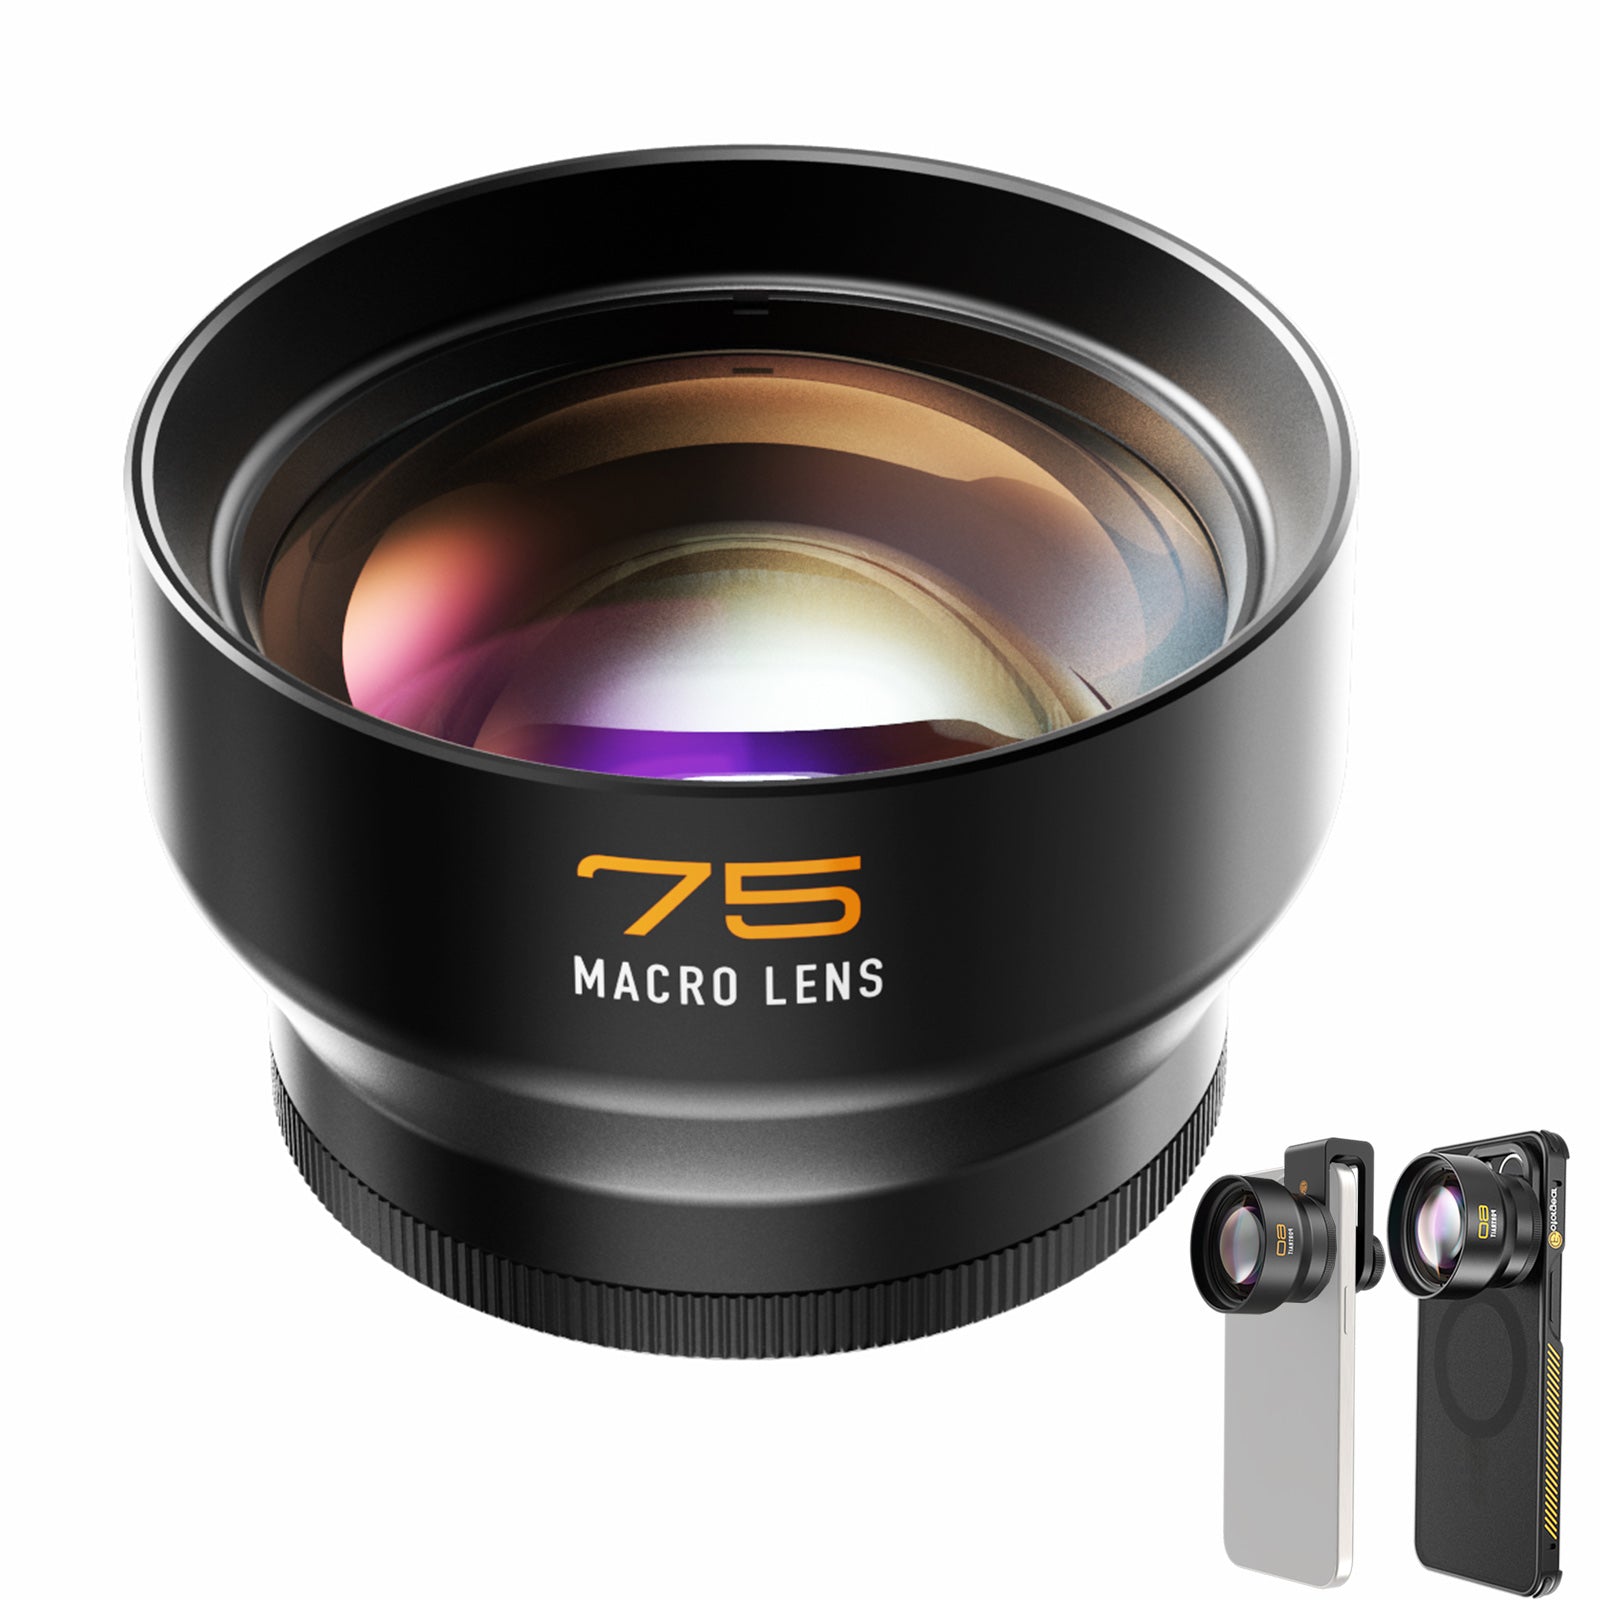 Fotorgear 75mm Telephoto Lens · Pro II series